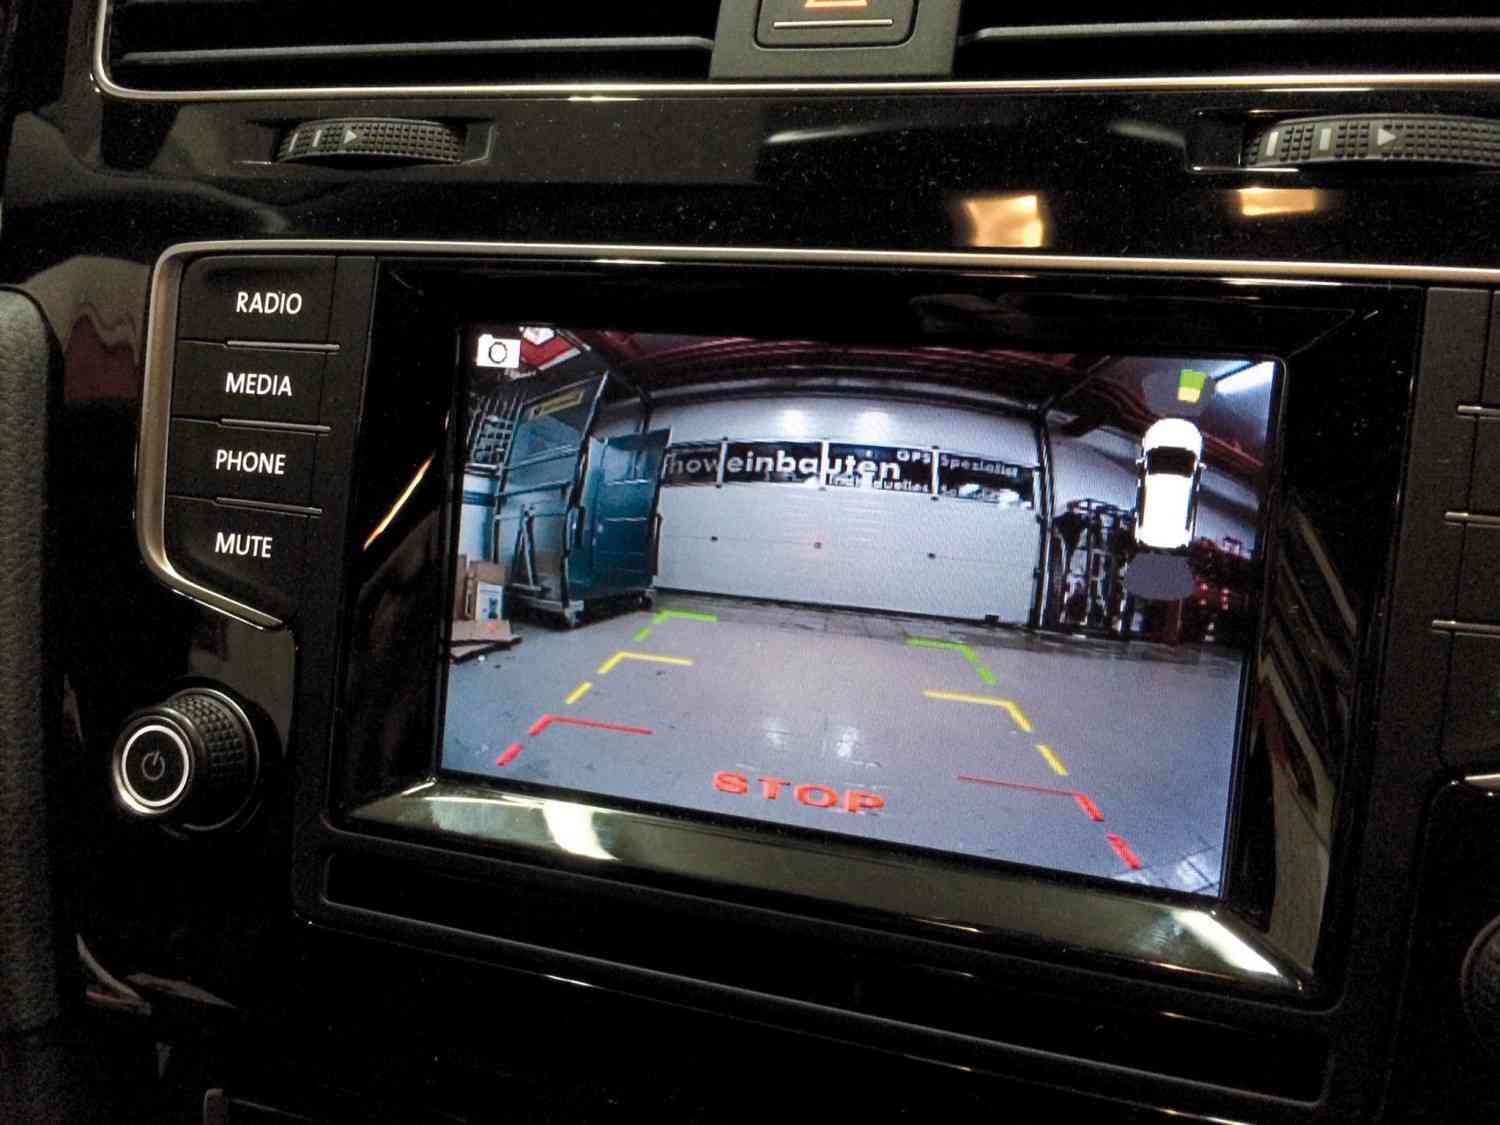 Zubehör Car-Media Adaptiv Systeme im Test, Bild 8